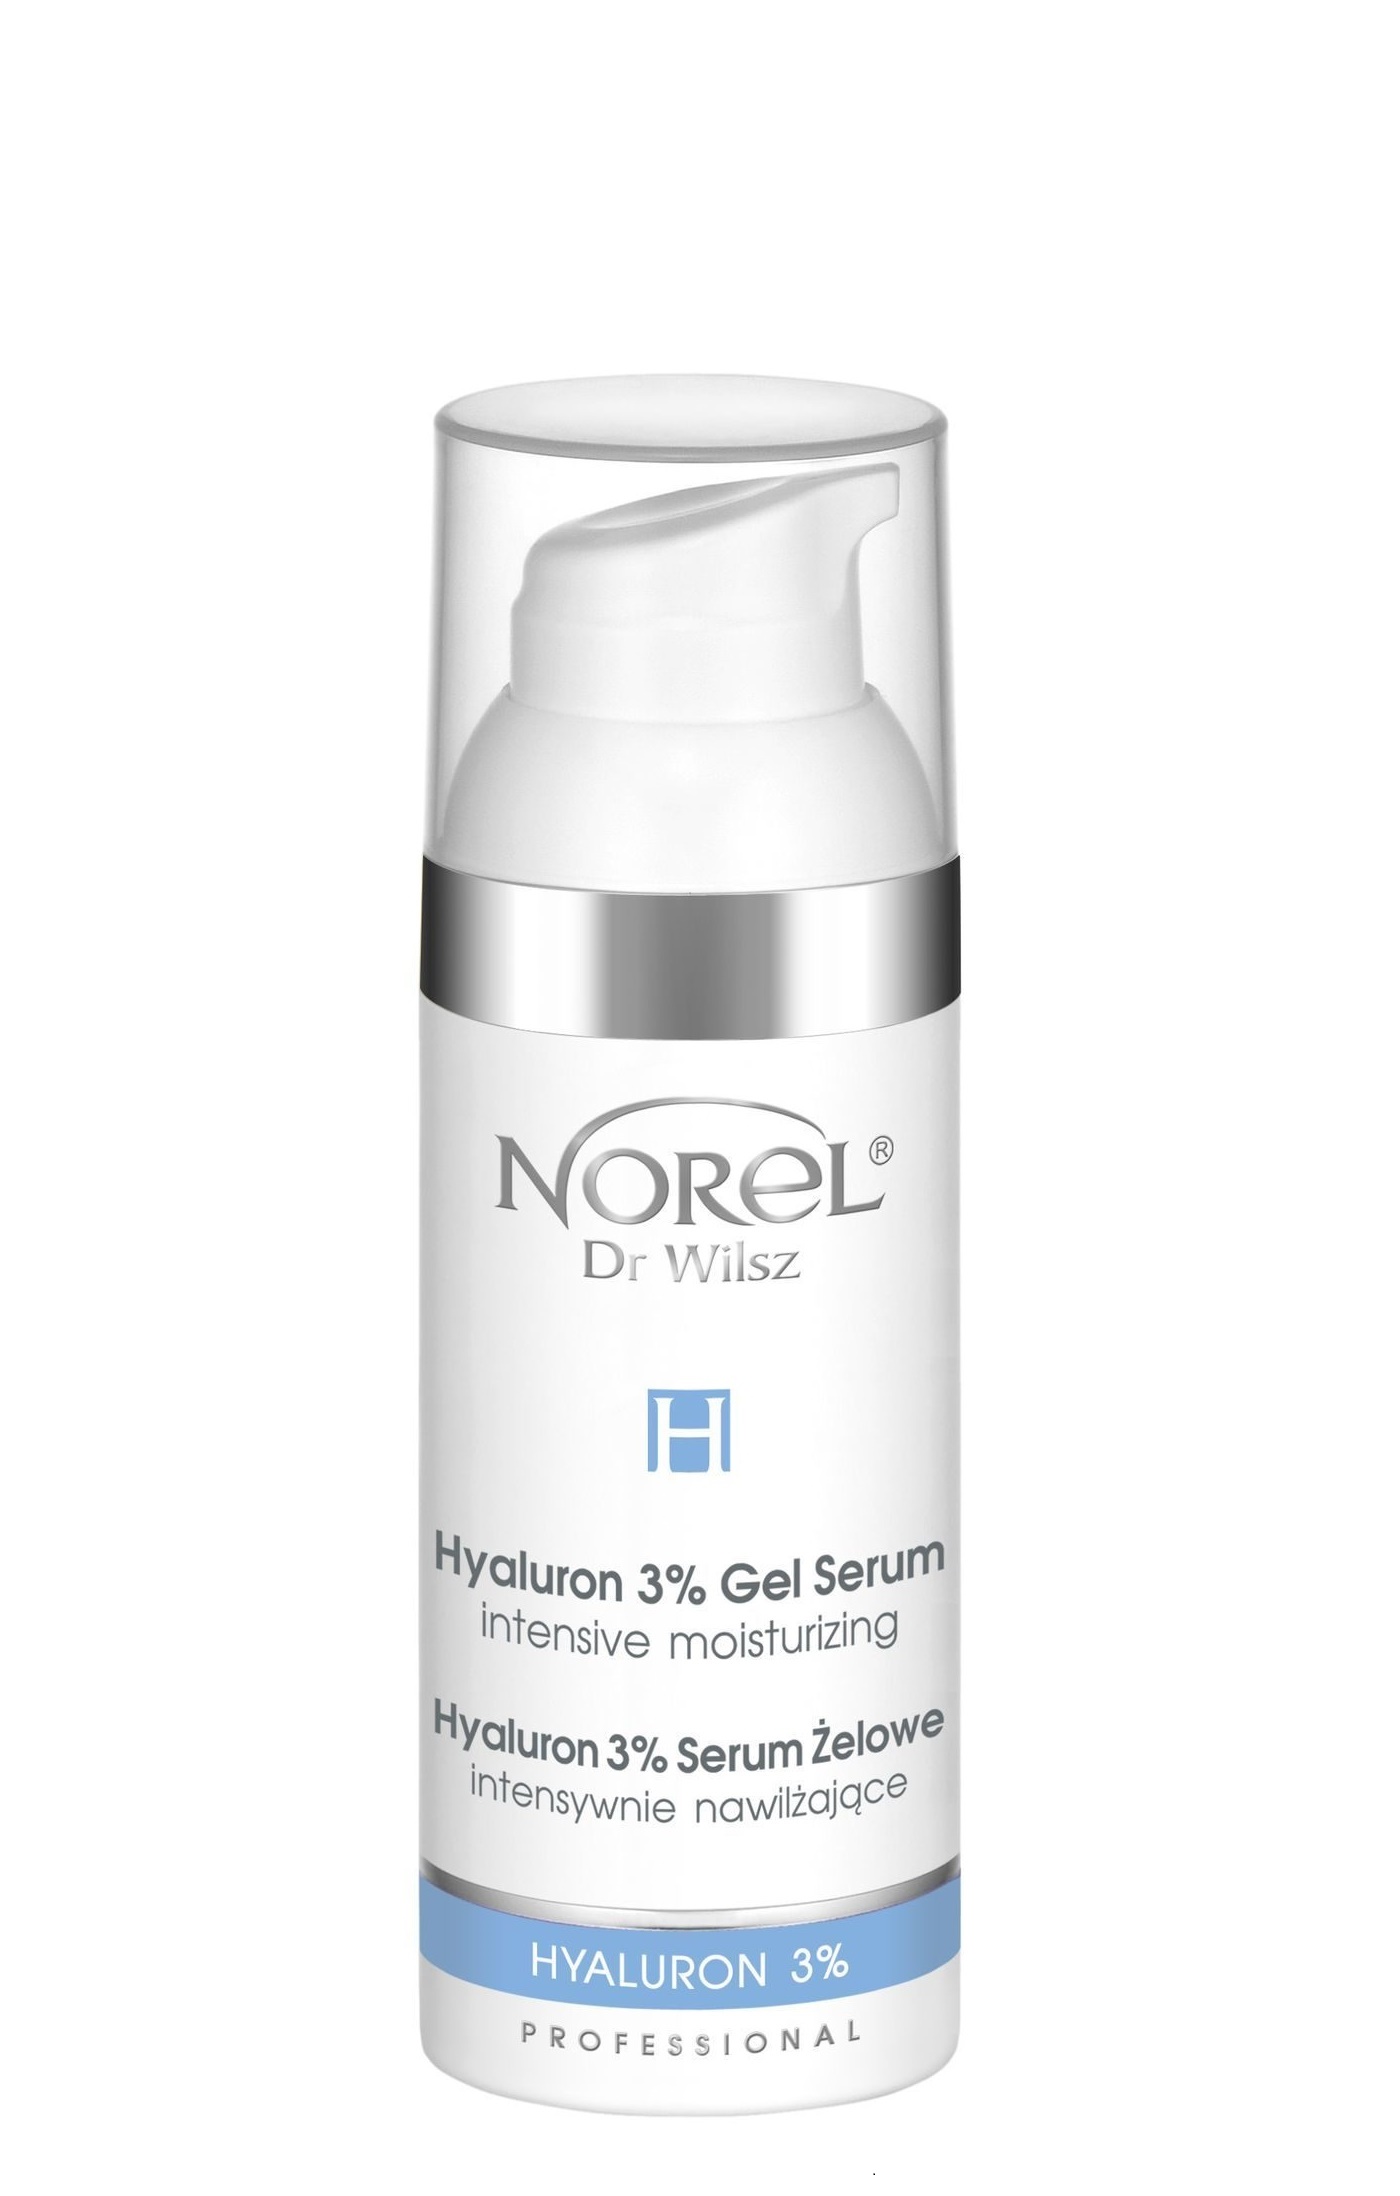 Gel serum. Norel Hyaluron 3% Gel Serum-Intensive Moisturizing. Norel Dr Wilsz очищающее молочко Hyaluron Plus. Сыворотка увлажняющая (50 мл). Concentrate интенсивная сыворотка гиалуроновая.